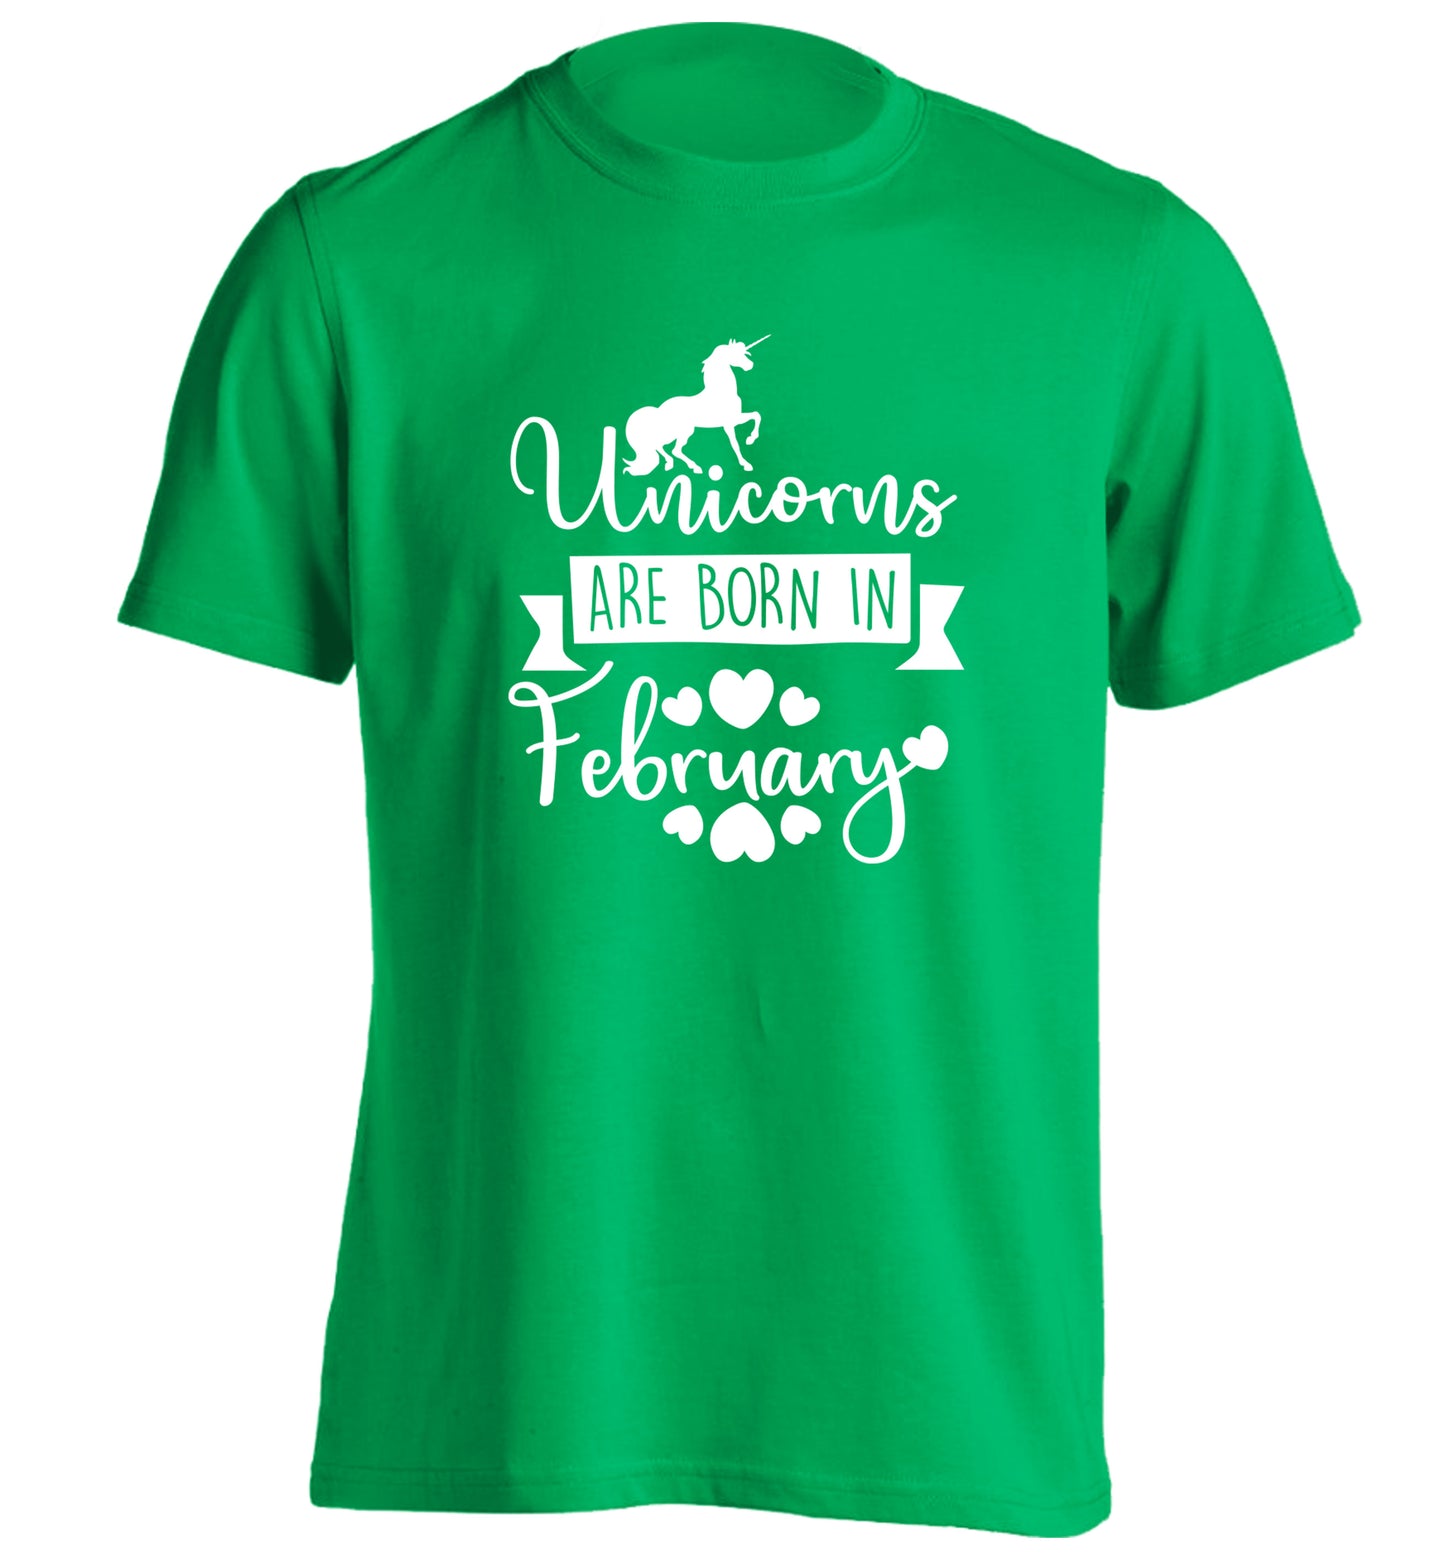 Unicorns are born in February adults unisex green Tshirt 2XL